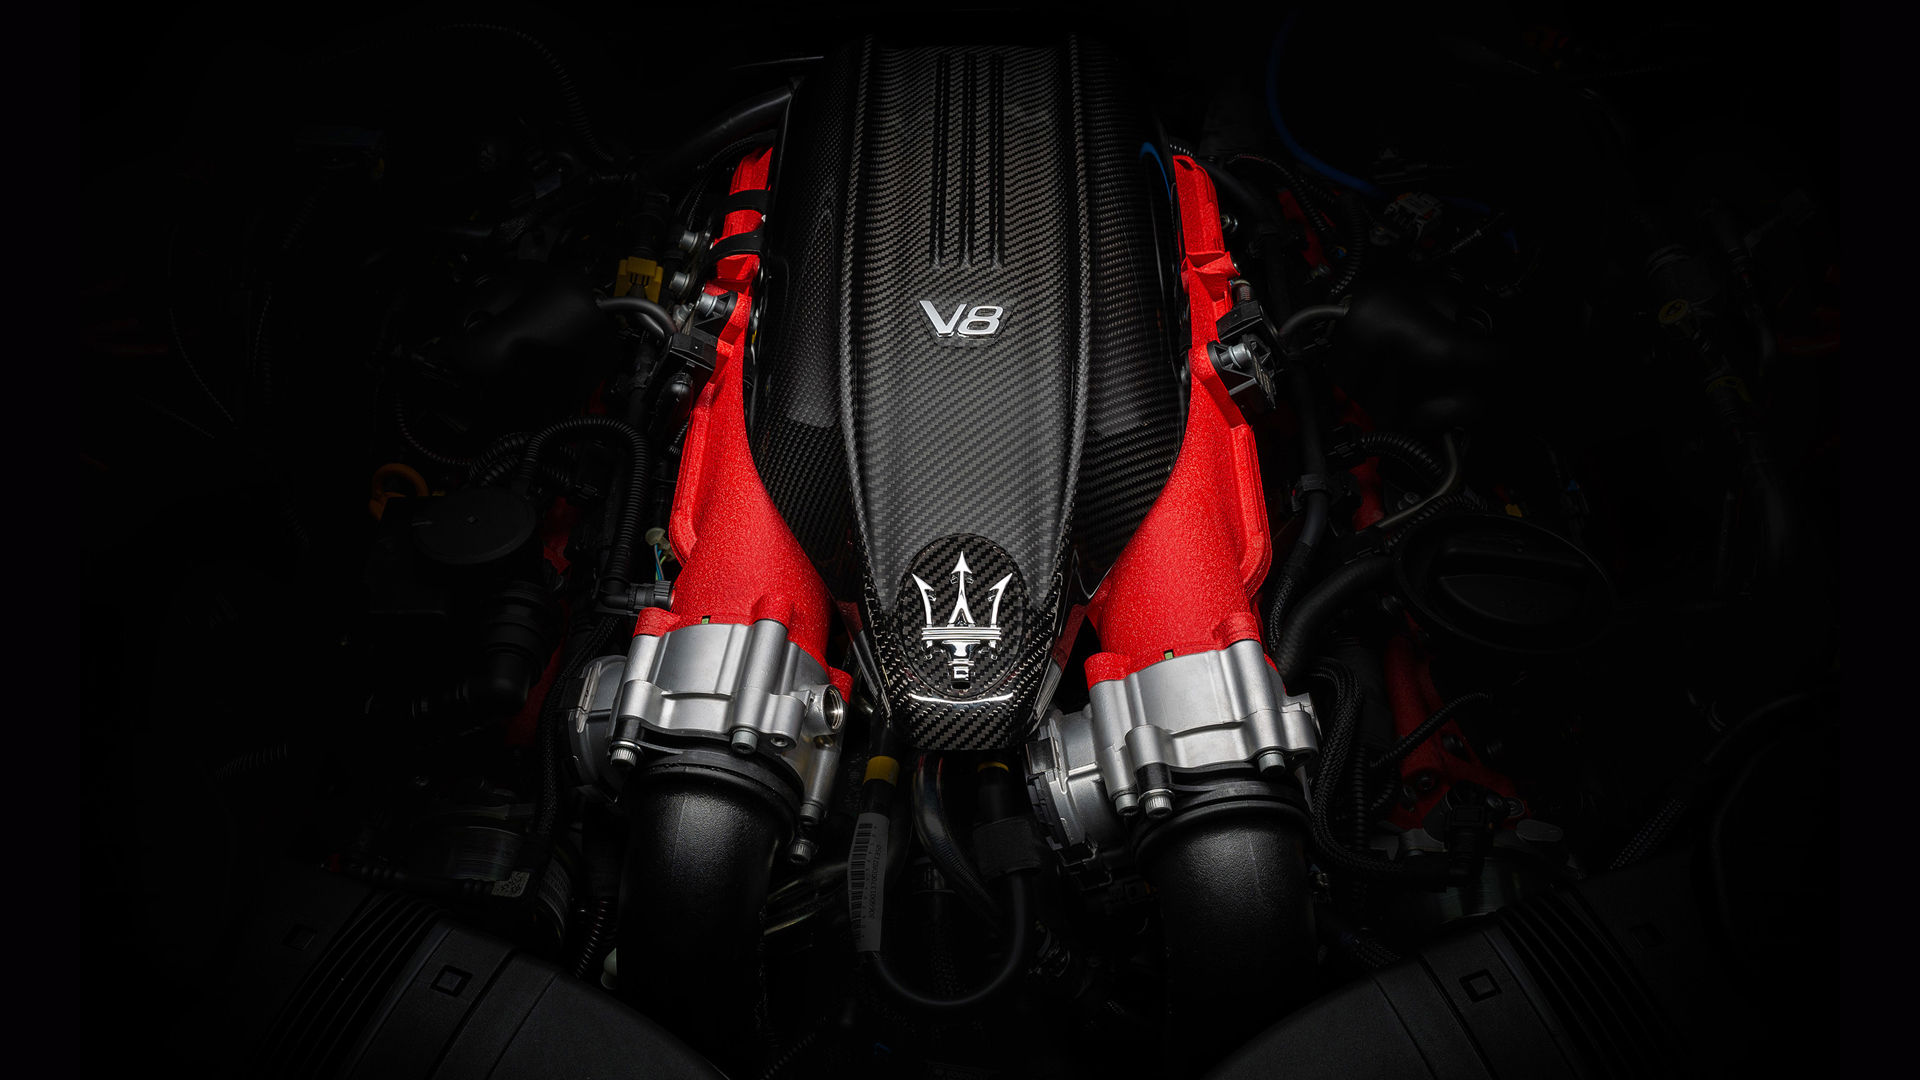 Draufsicht auf den V8-Motor